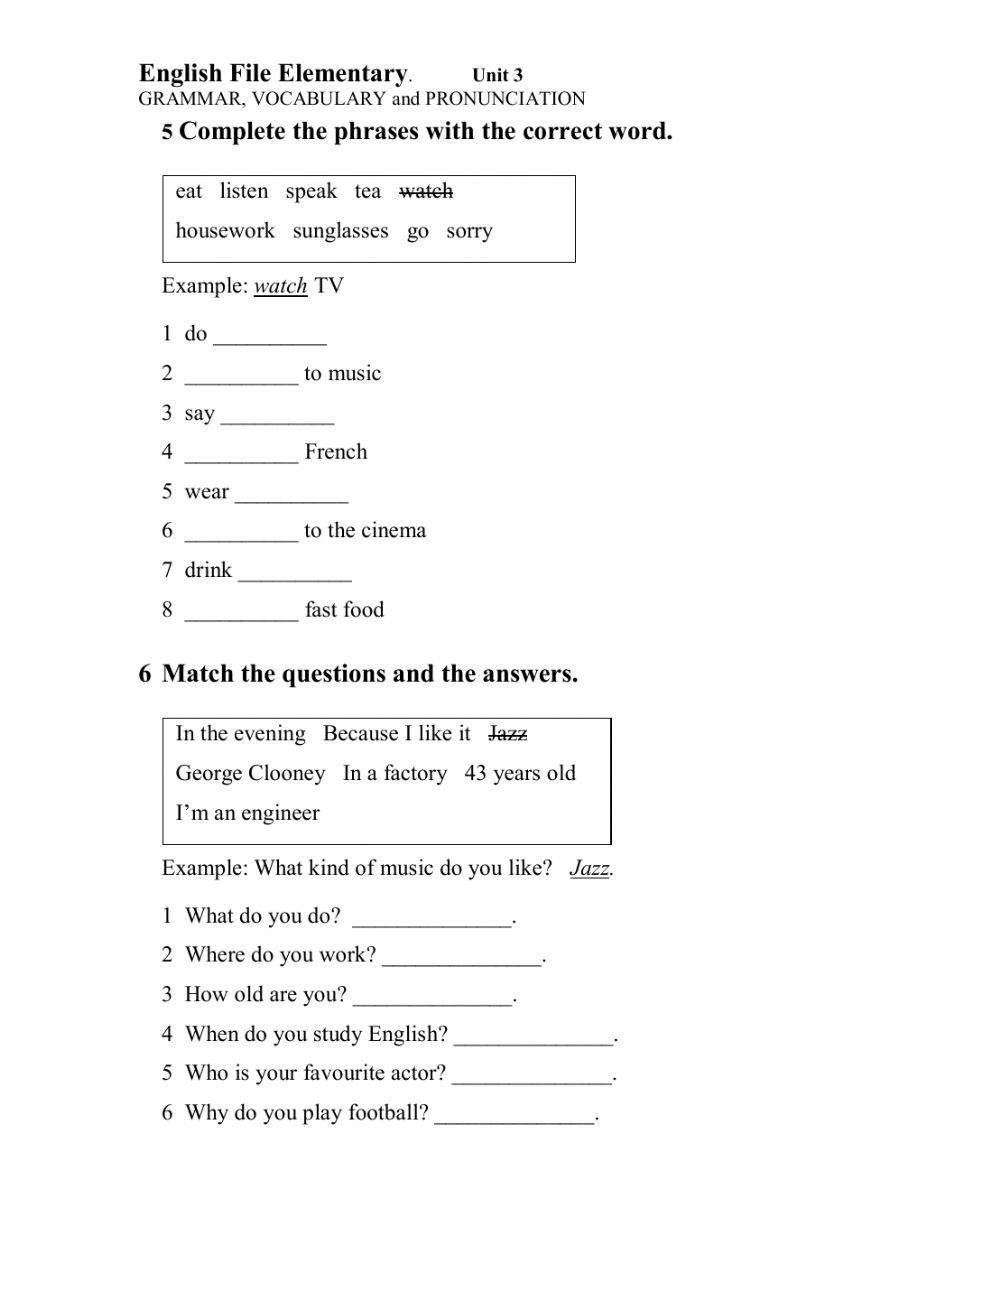 English File Elementary Unit 3 Grammar,vocabulary and pronunciation